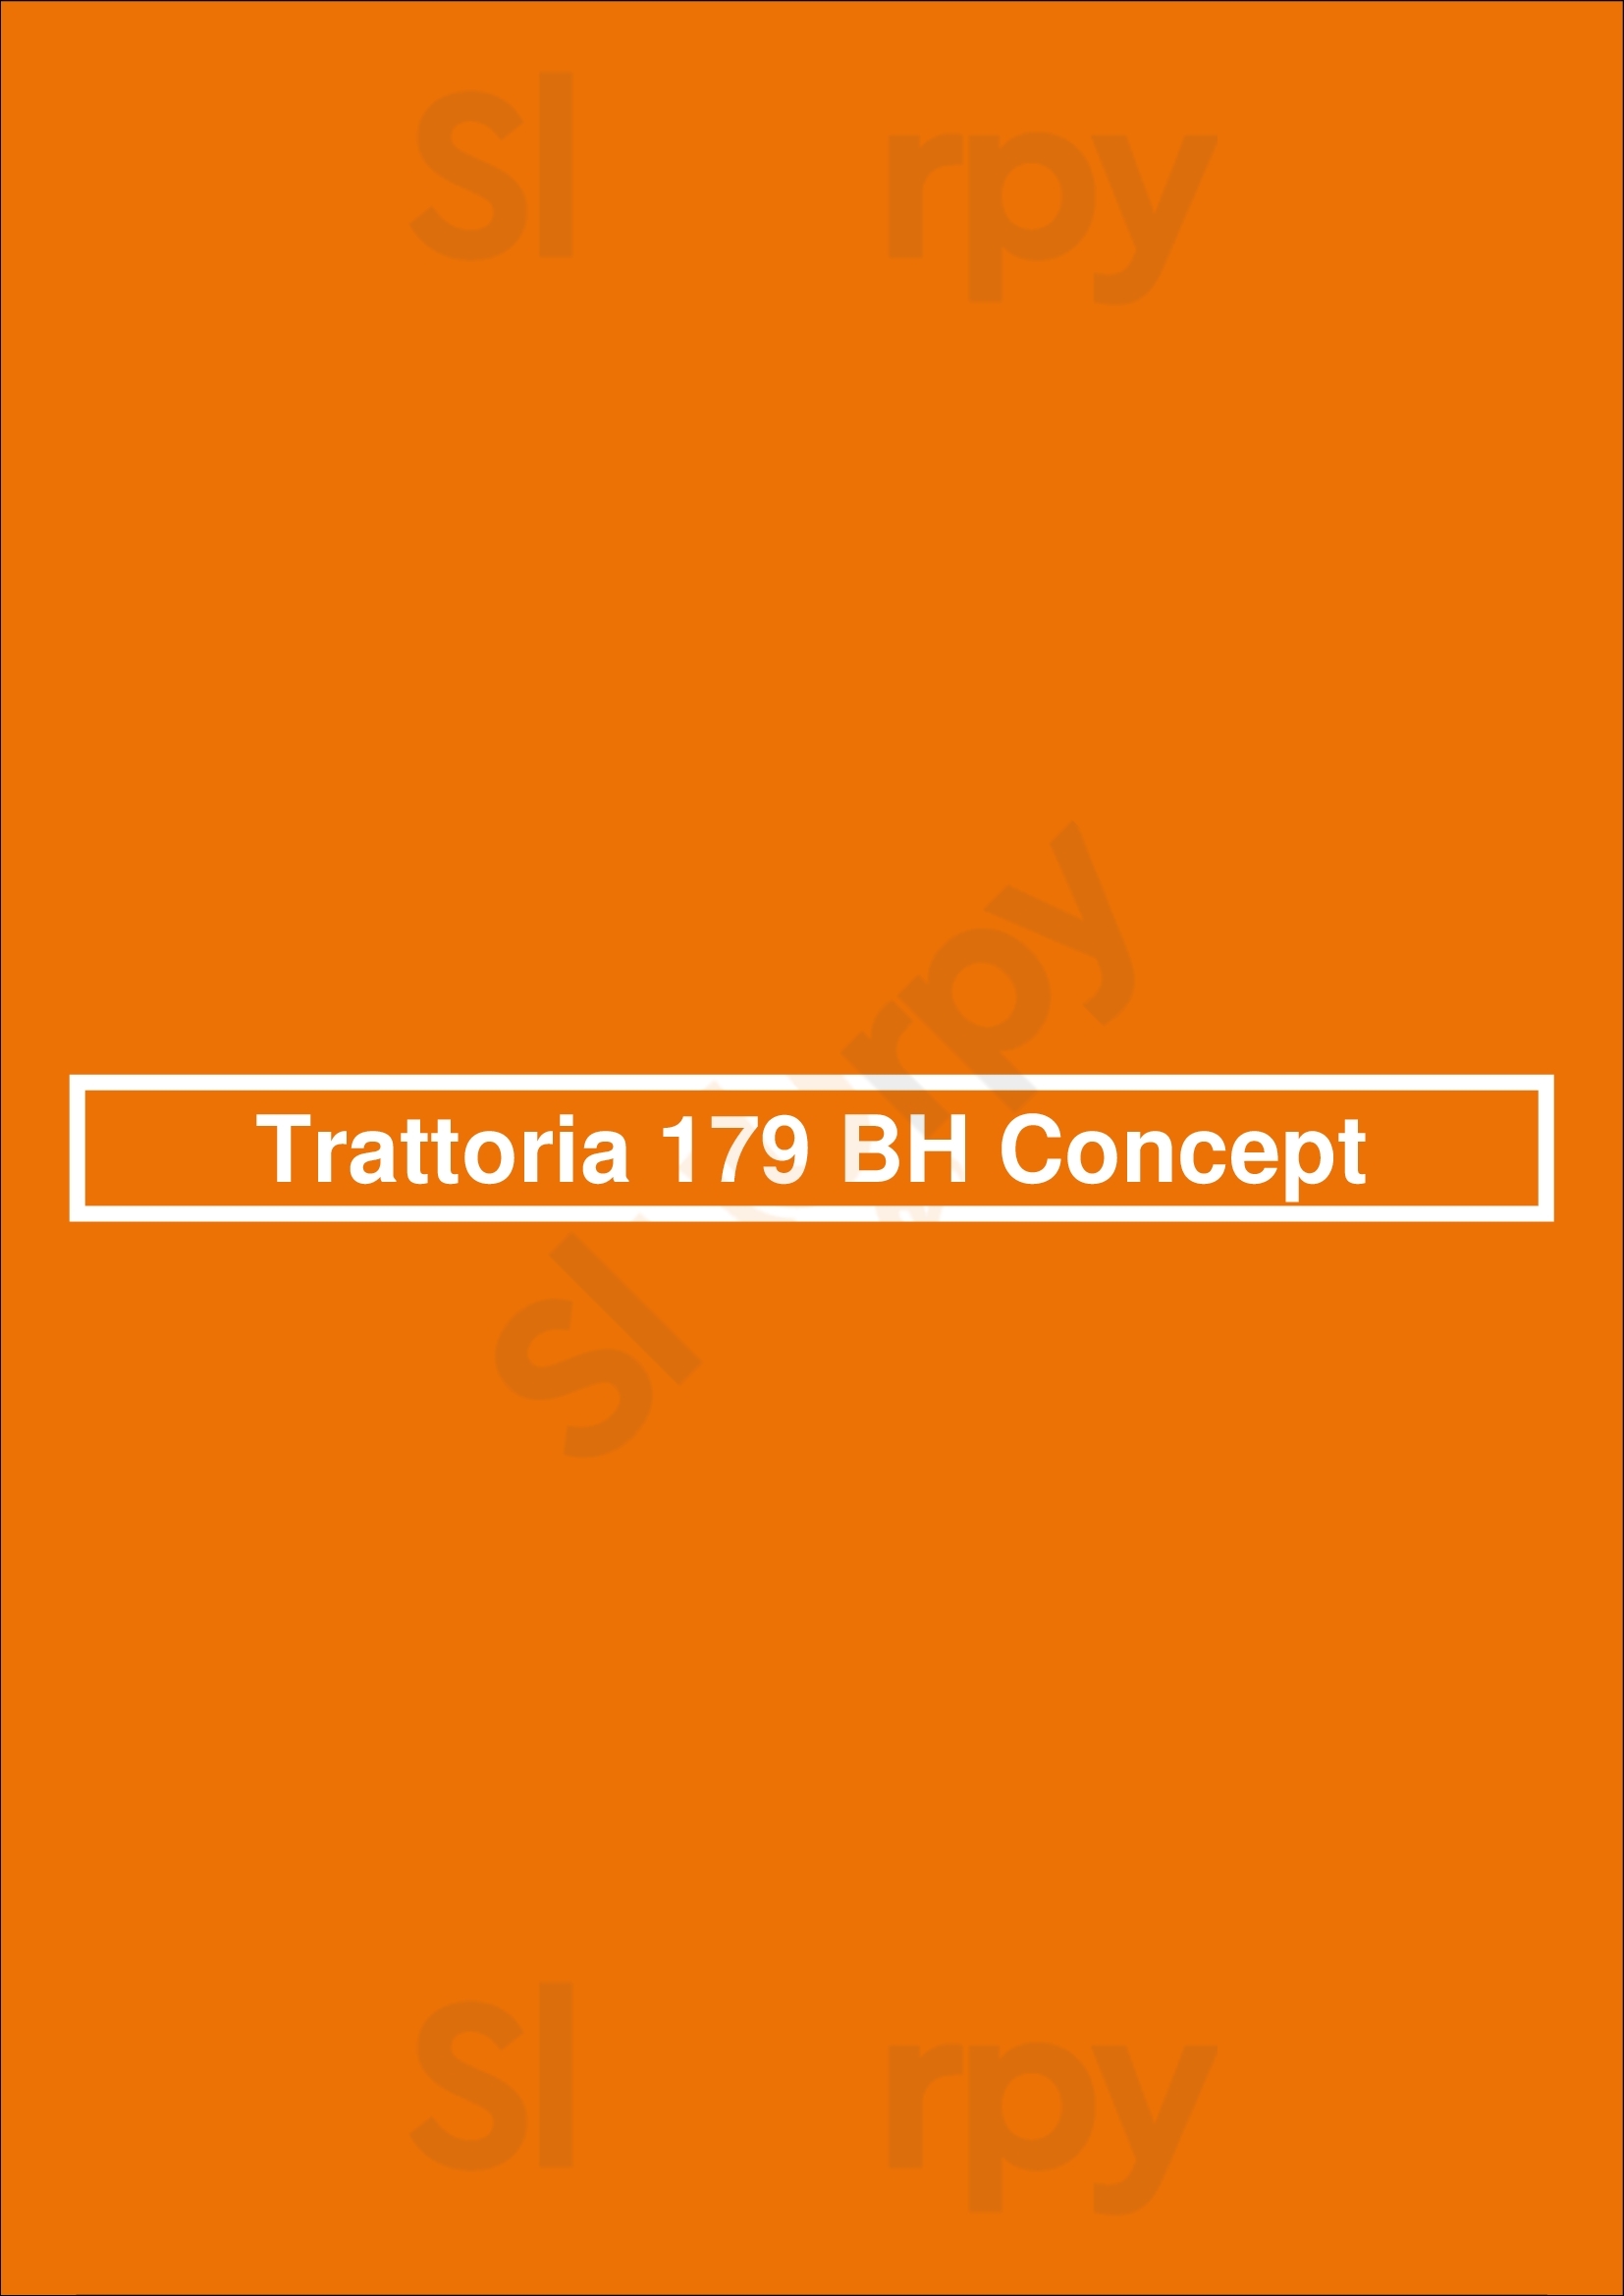 Trattoria 179 Bh Concept Porto Menu - 1